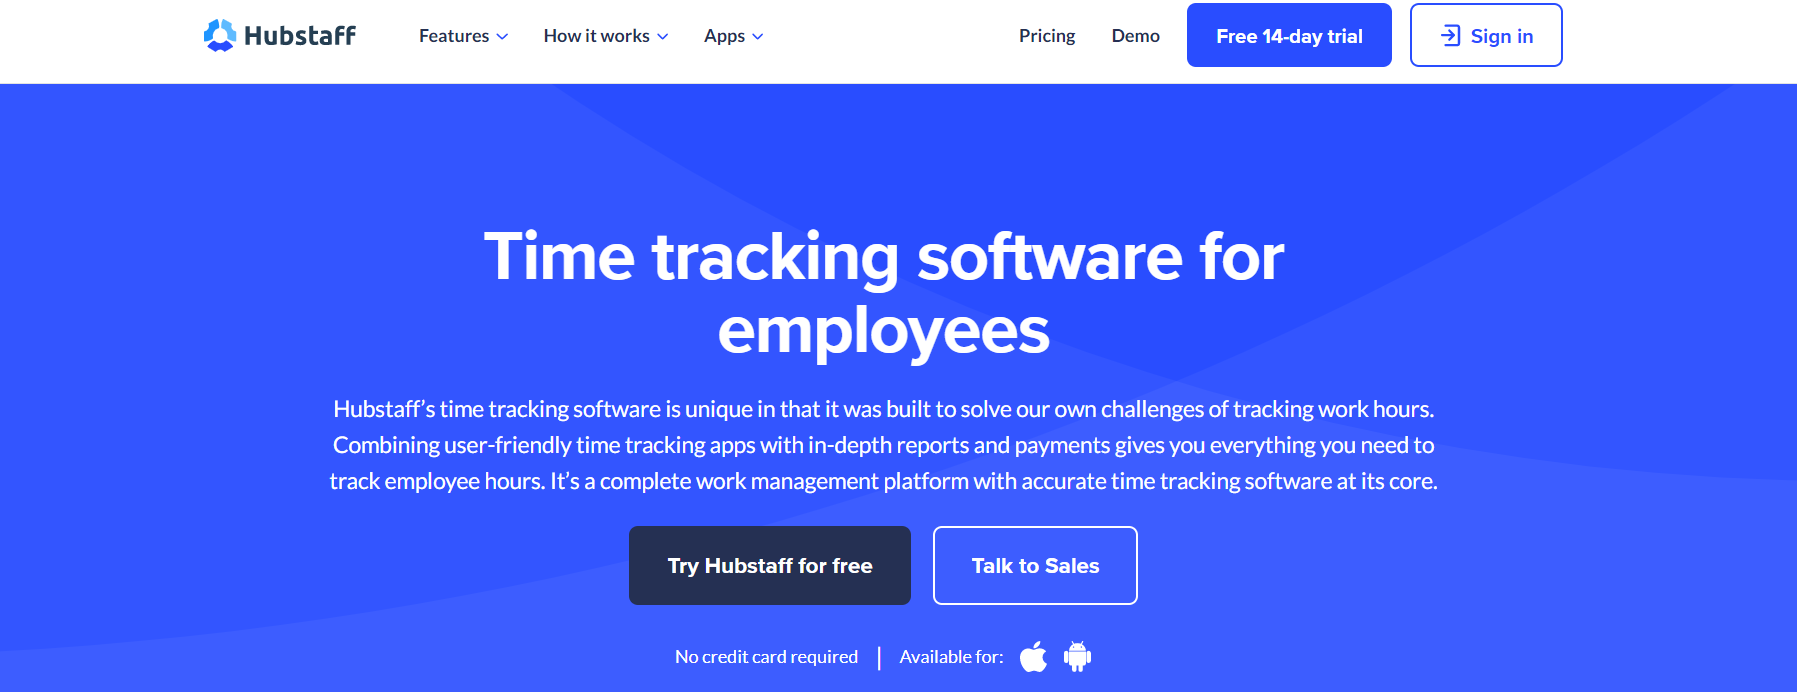 Hubstaff Time Tracking Software